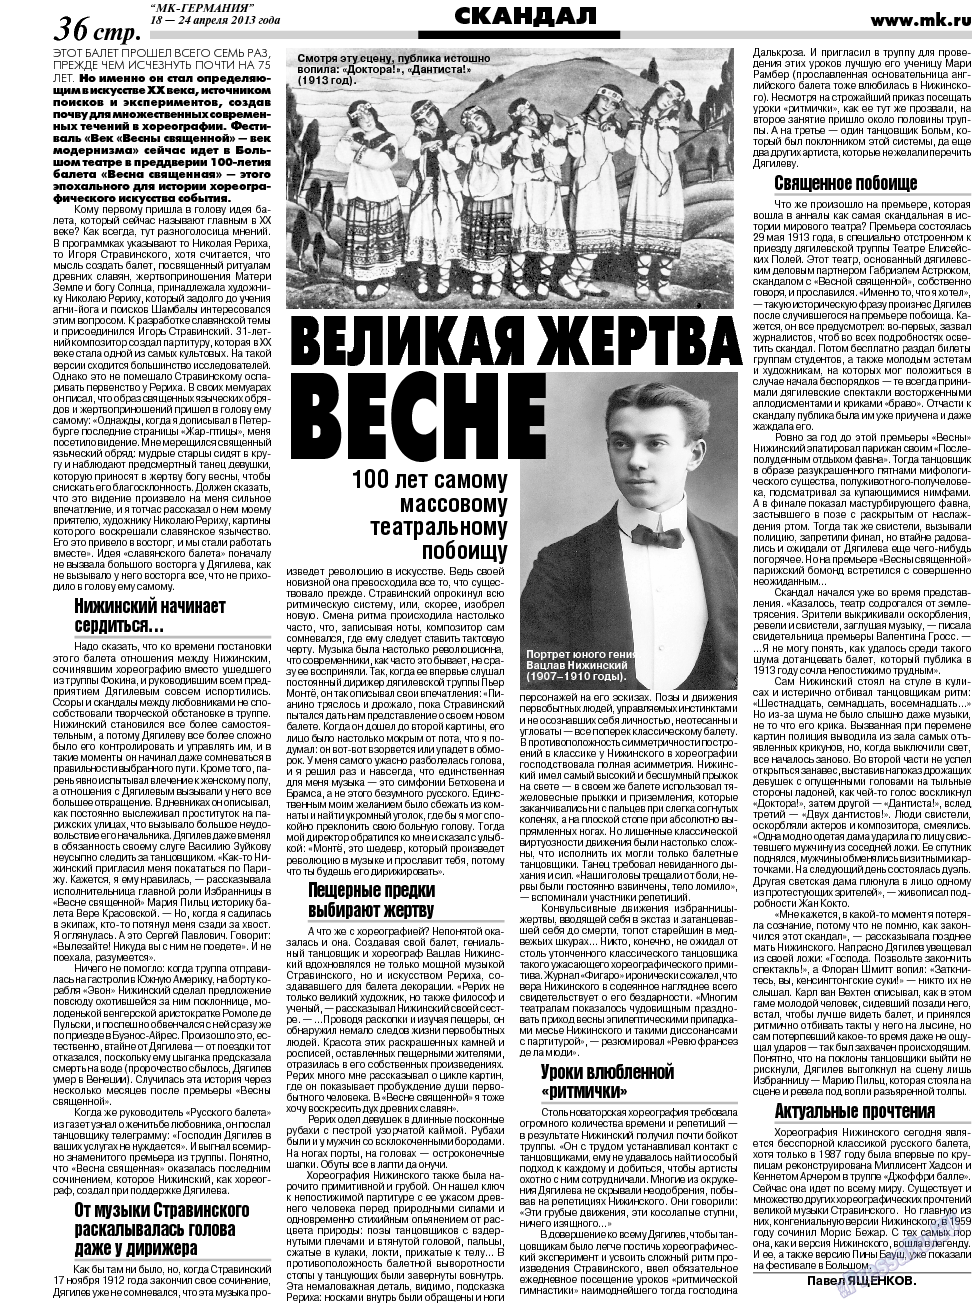 МК-Германия, газета. 2013 №16 стр.36